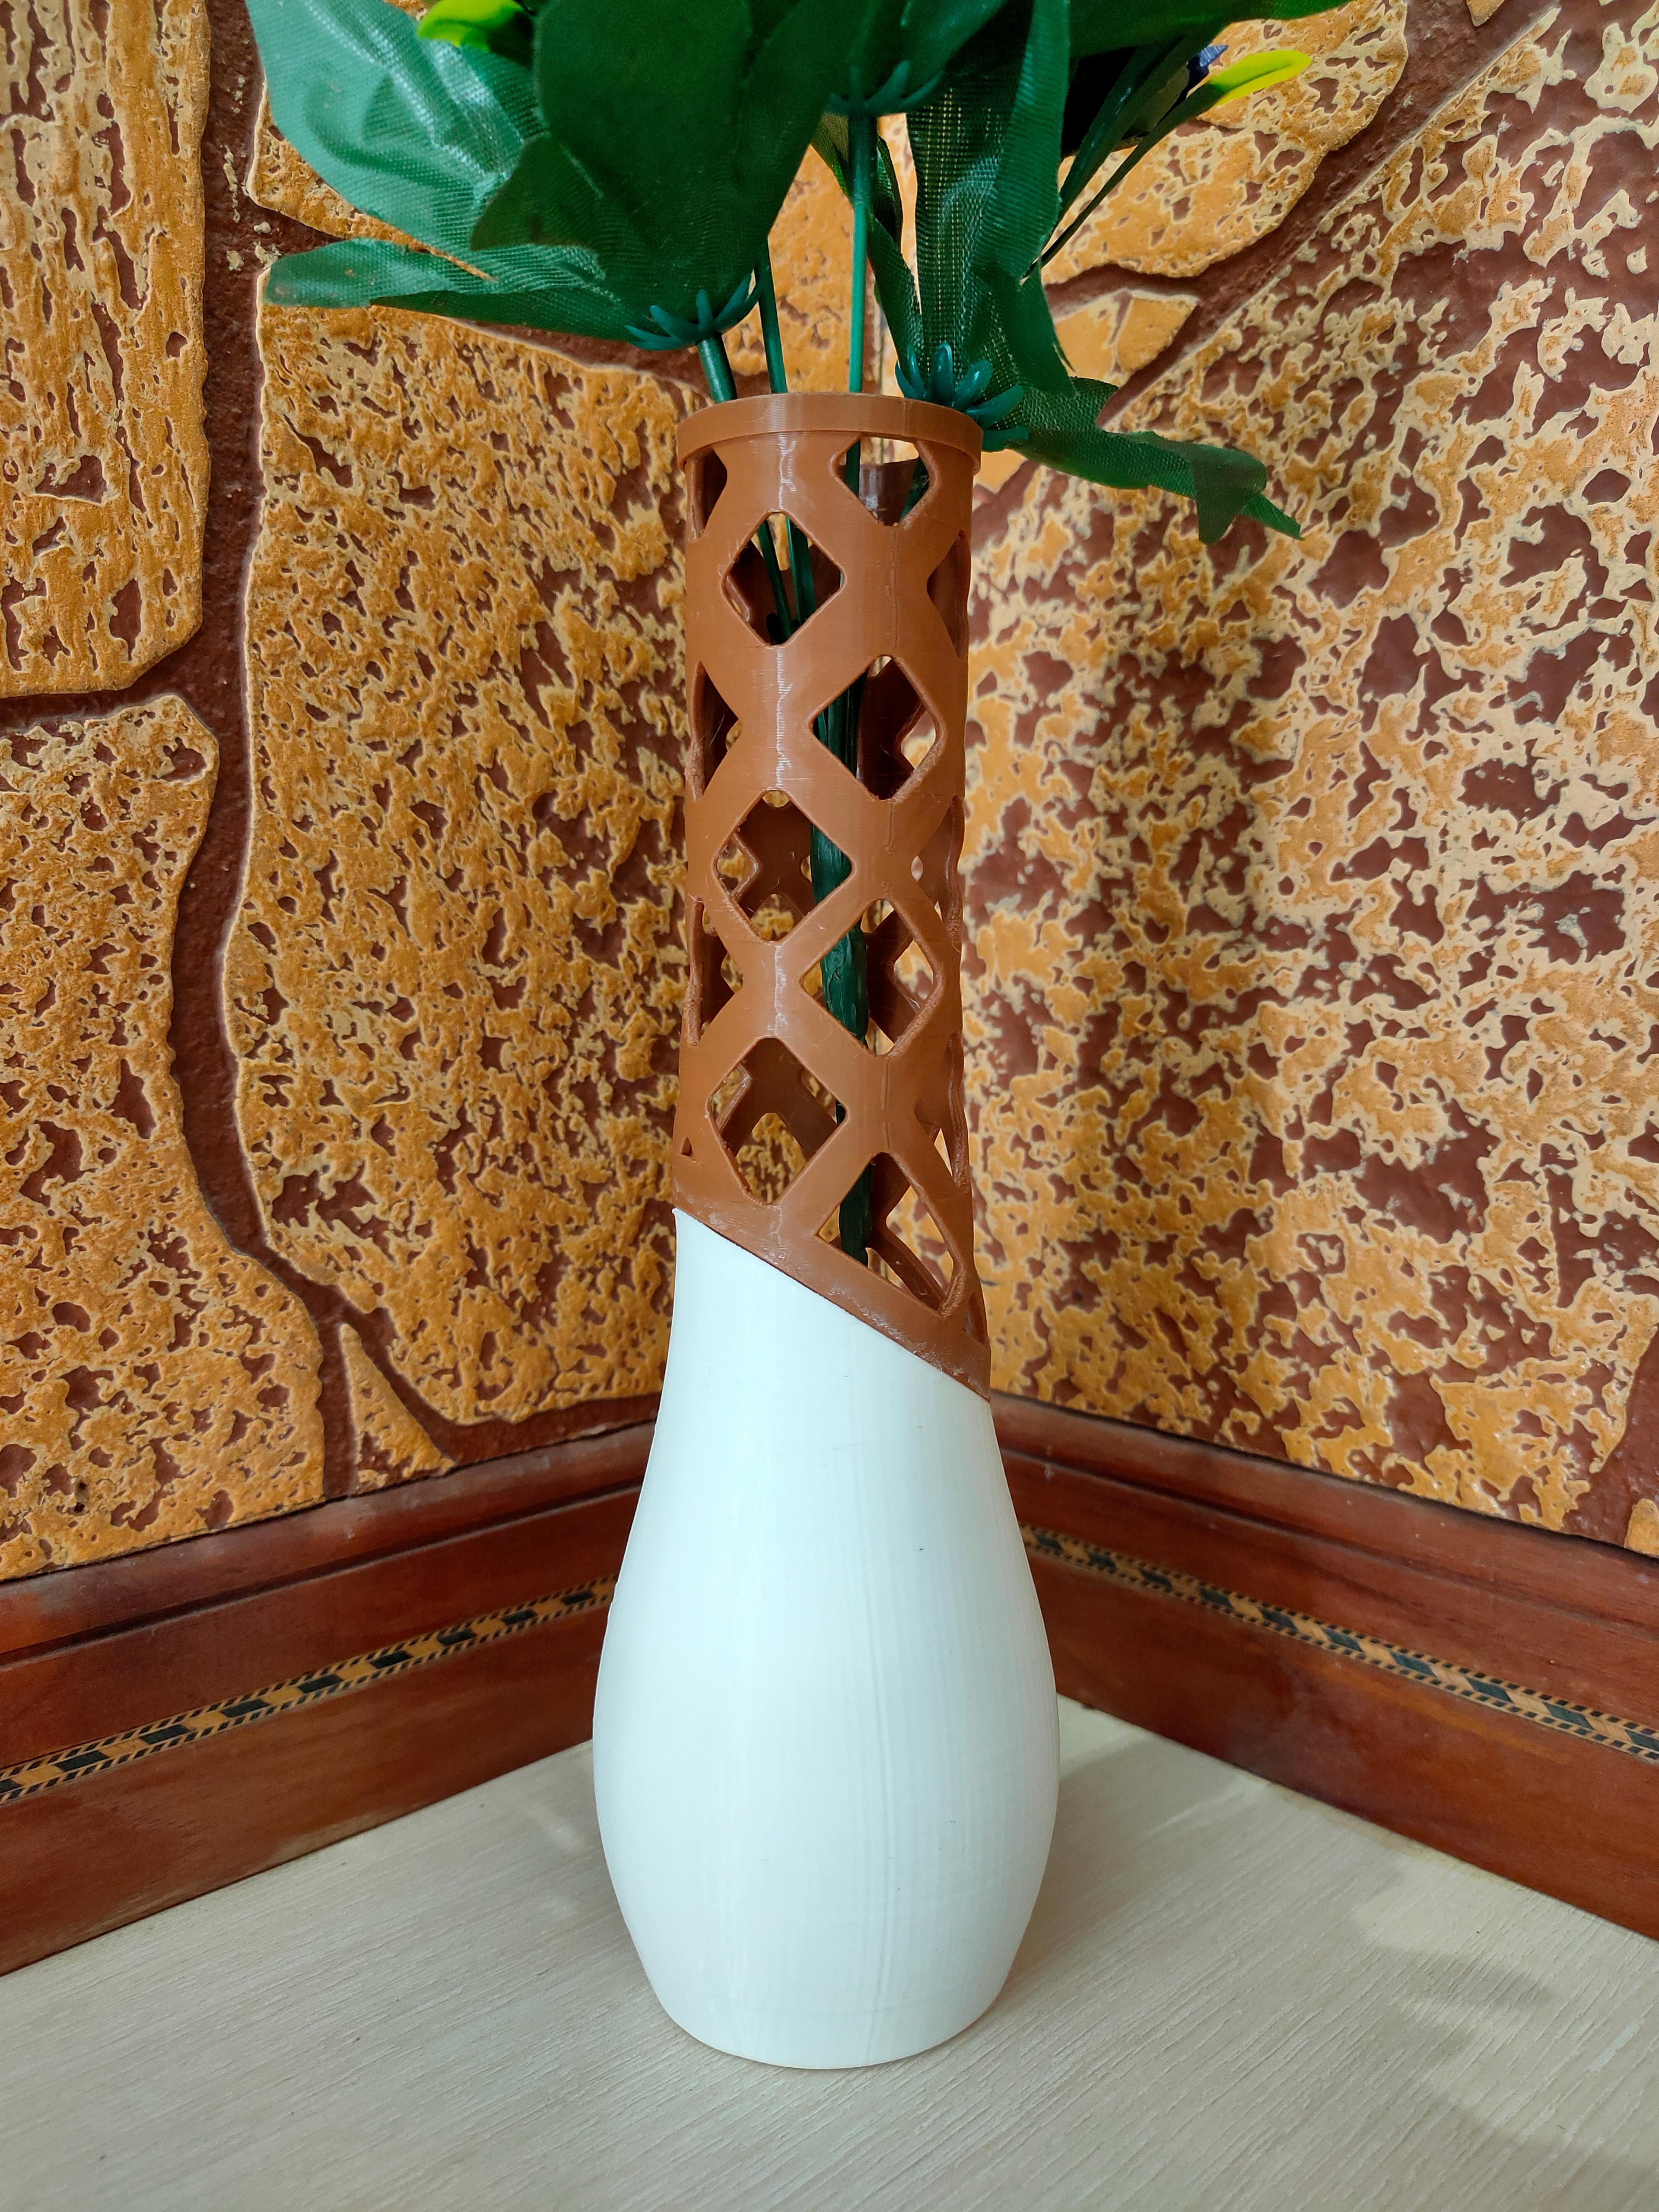 Dual 3d printable Vase  3d model